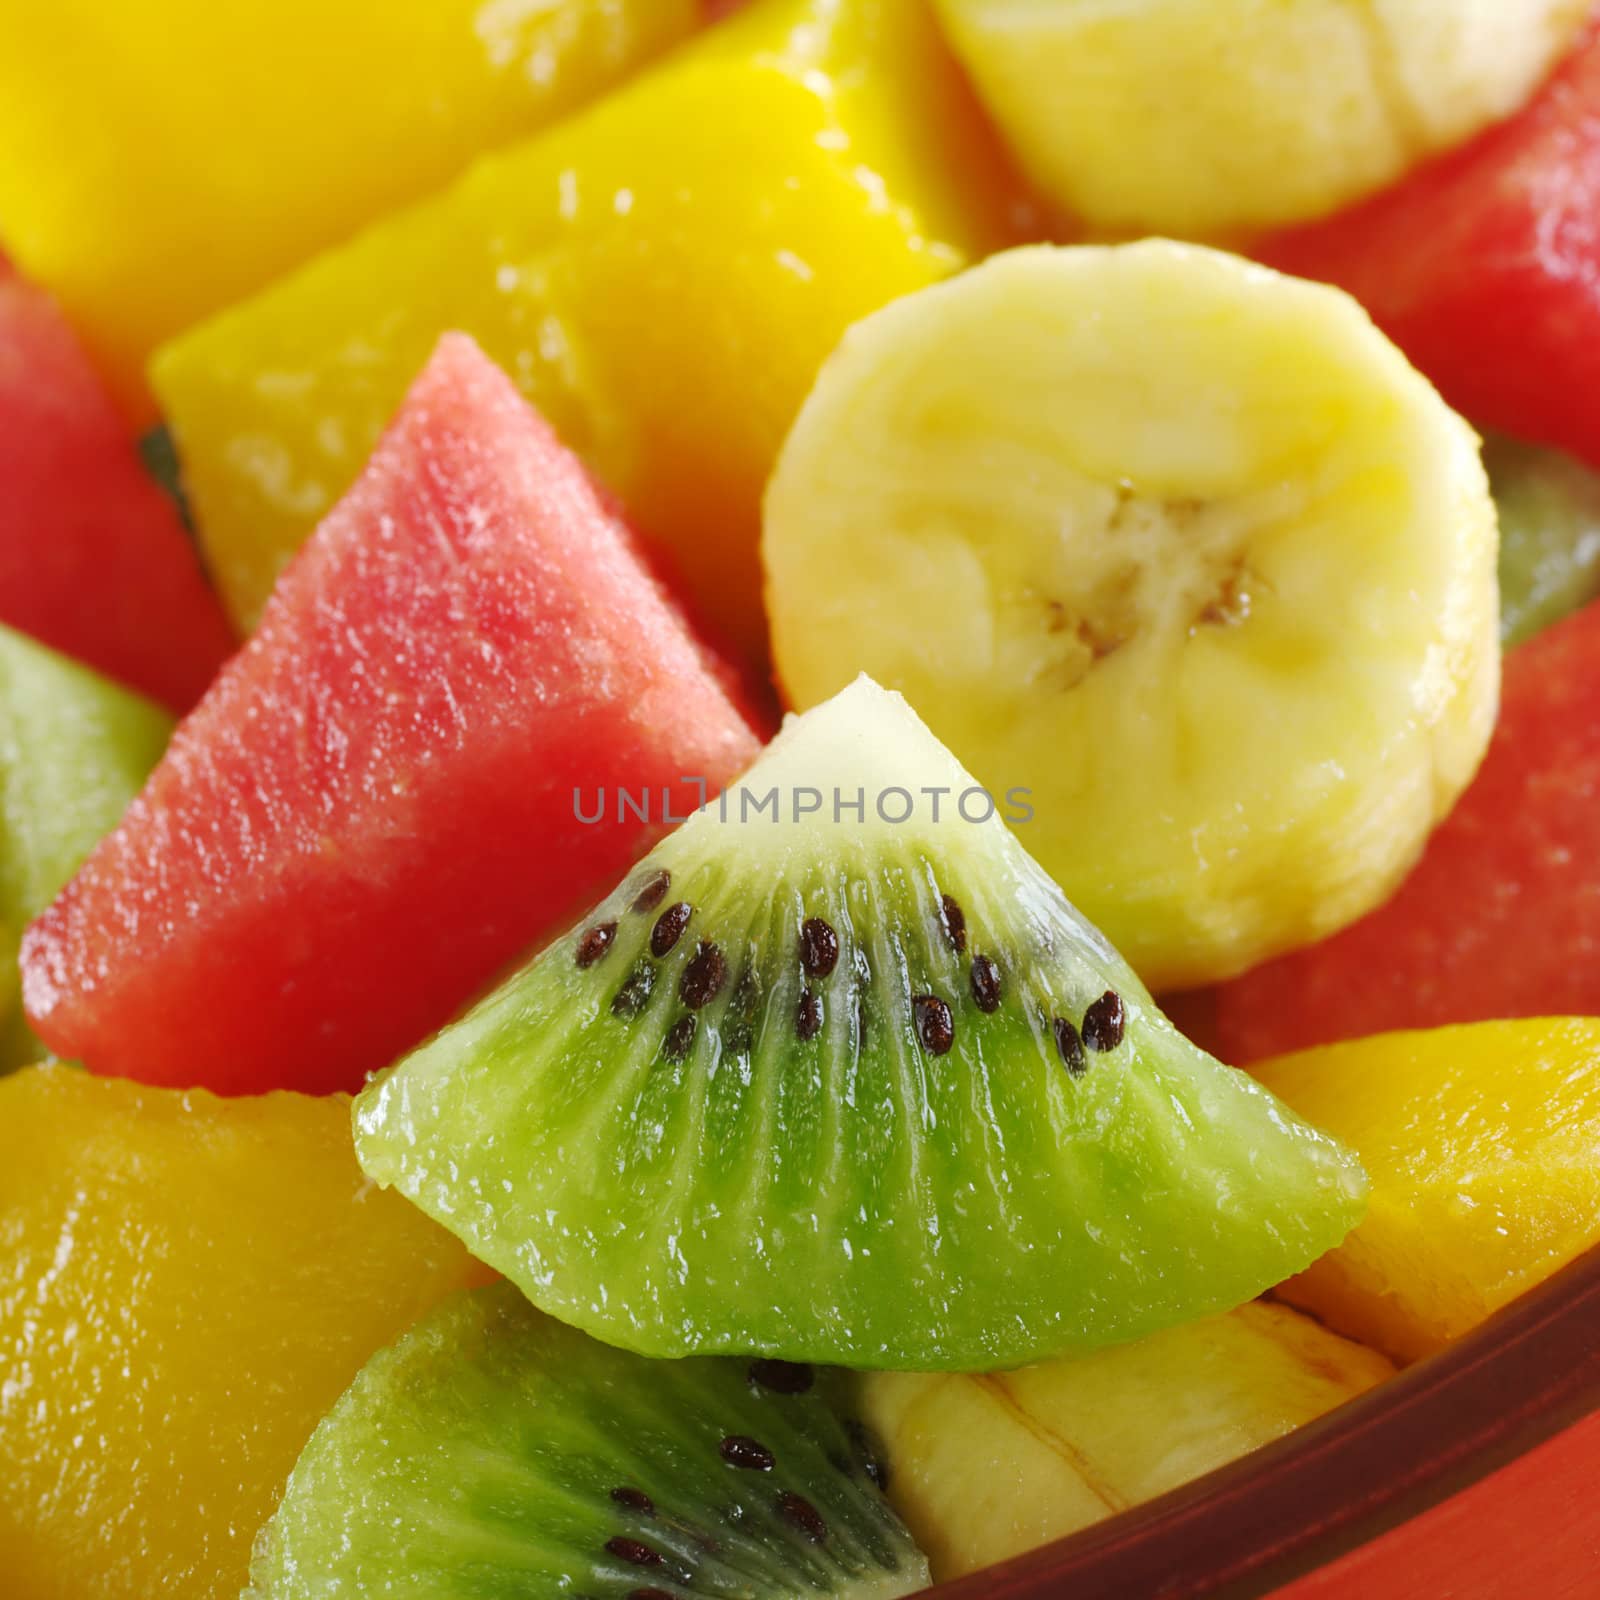 Tropical Fruit Mix (Kiwi, Mango, Banana, Melon) by ildi